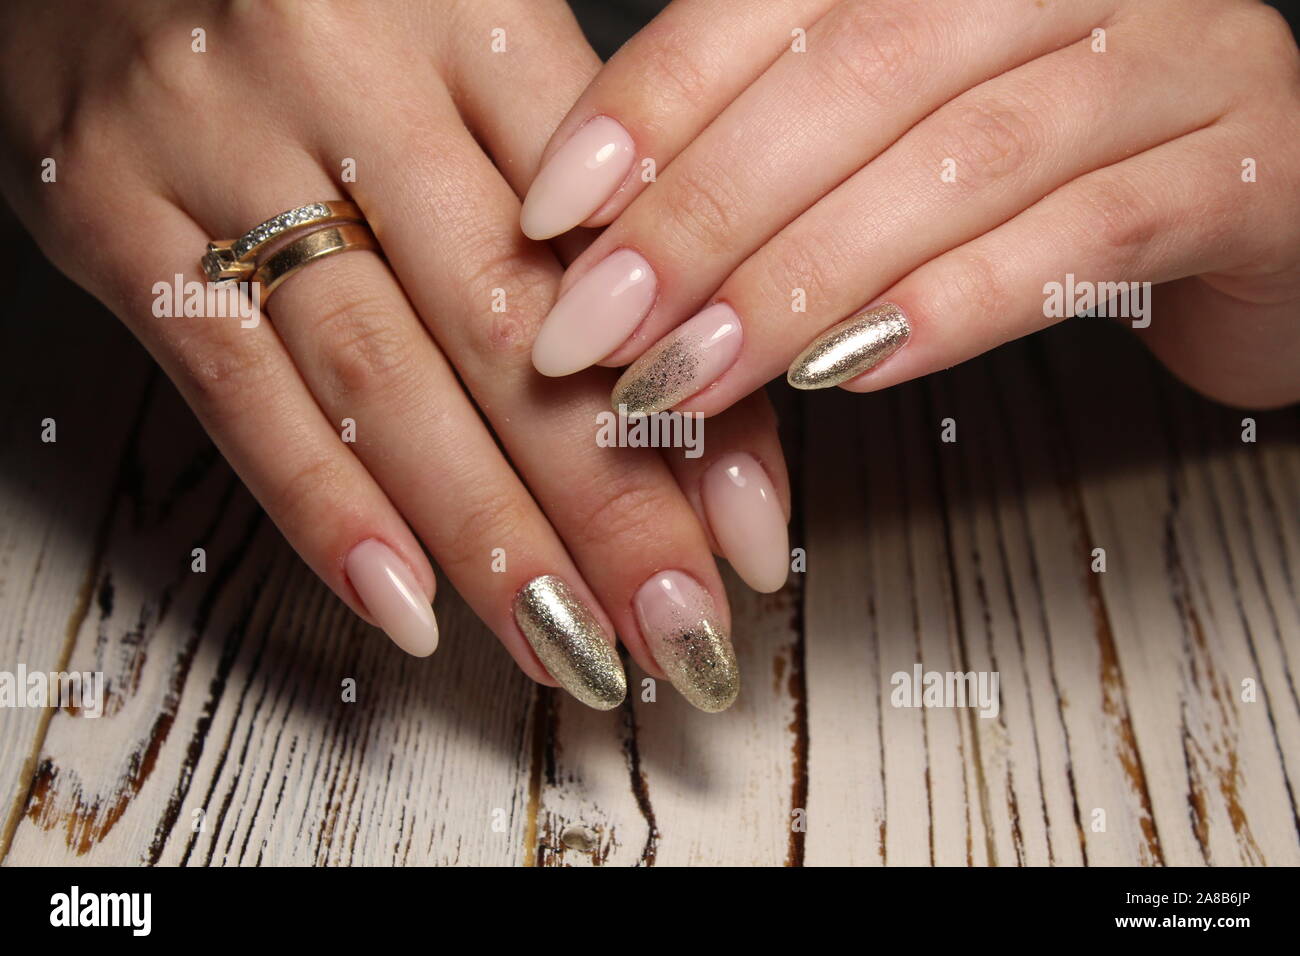 Nail #nails #nailart #nailarts#statenislndnail #statenislandnails  #floranails #naildesign #naildesigns by Elaine | Instagram